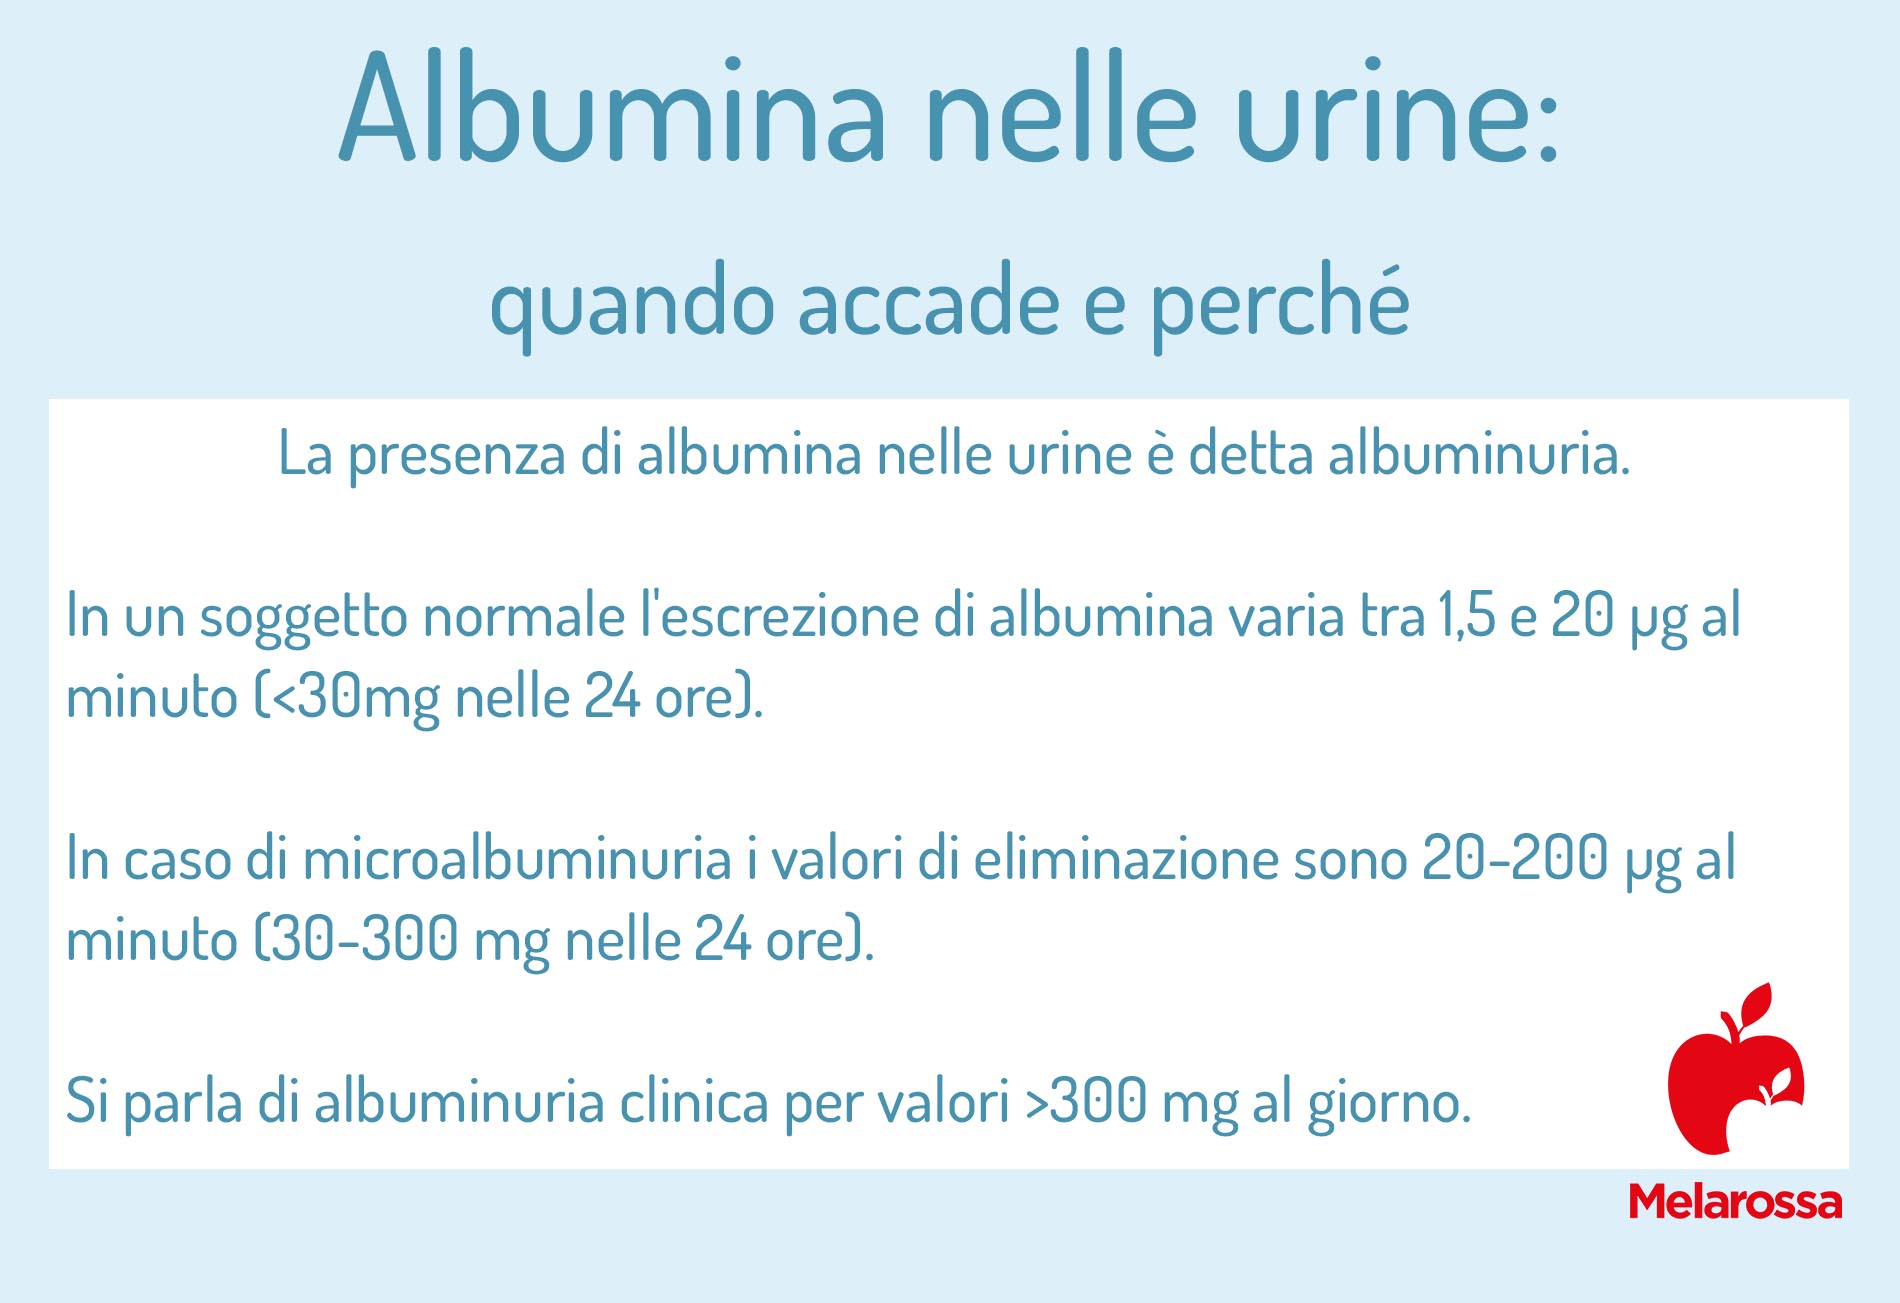 albumina nelle urine: quando accade e perché